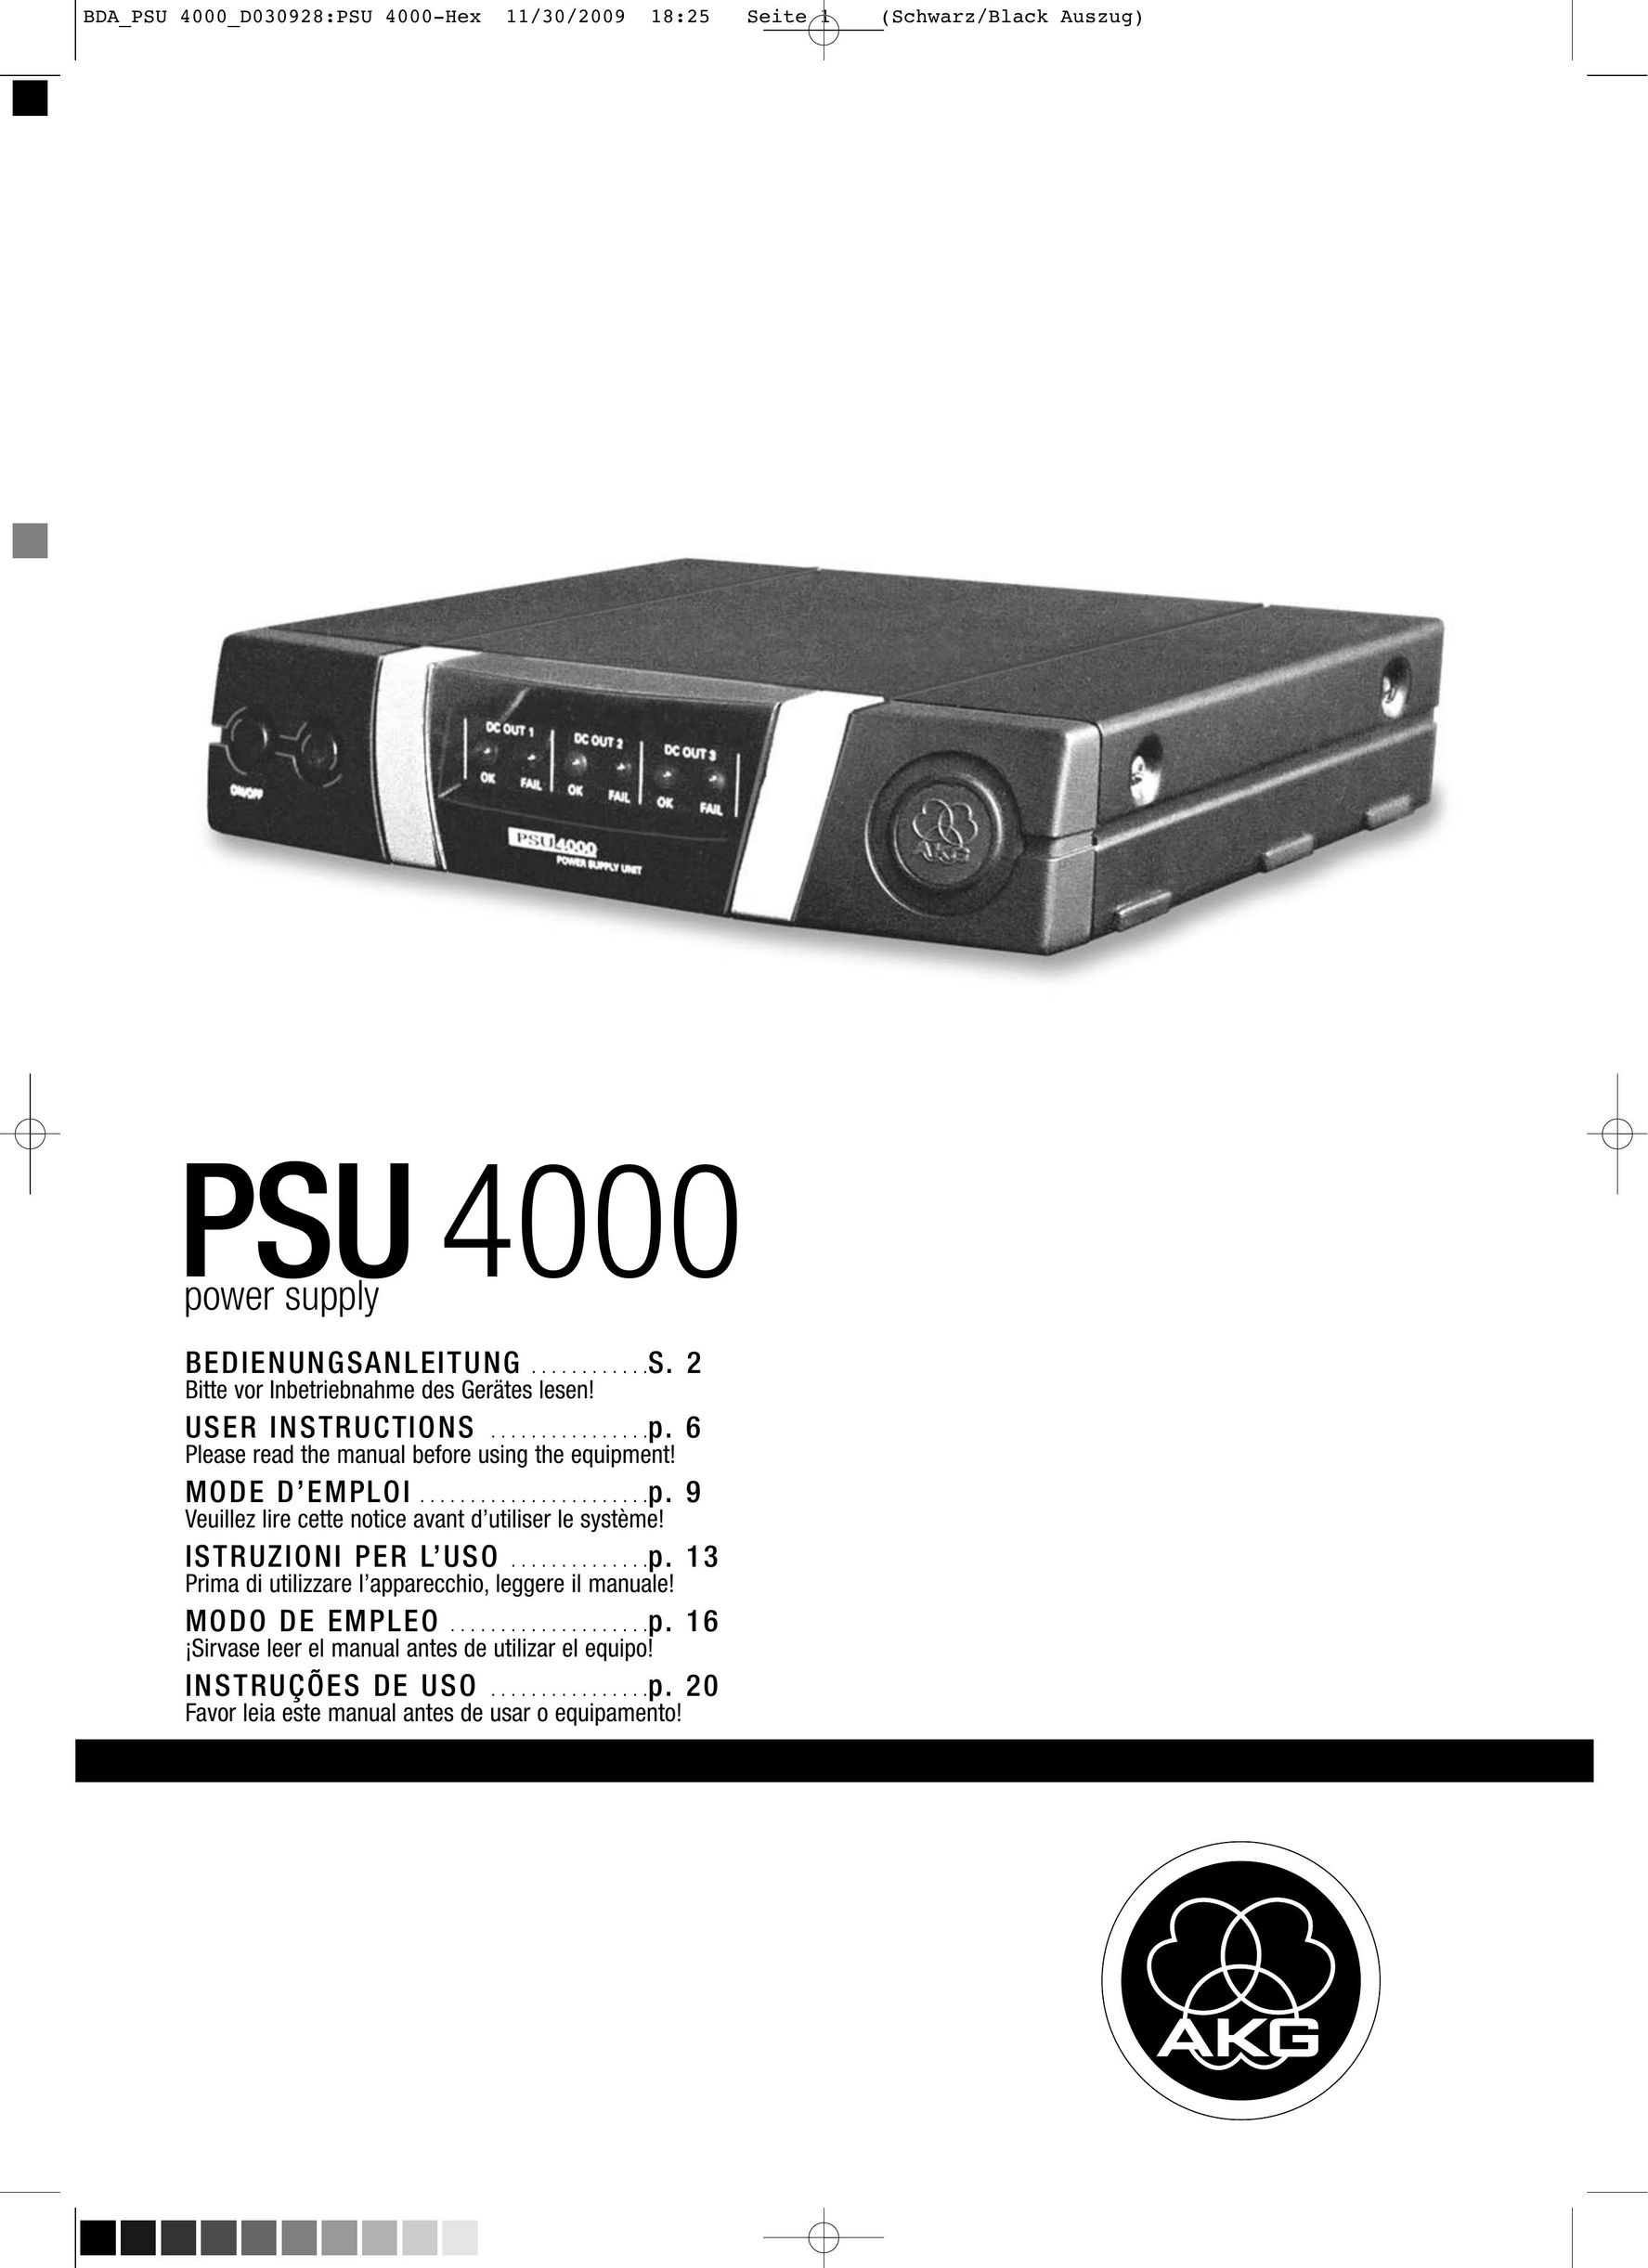 AKG Acoustics PSU4000 Video Gaming Accessories User Manual